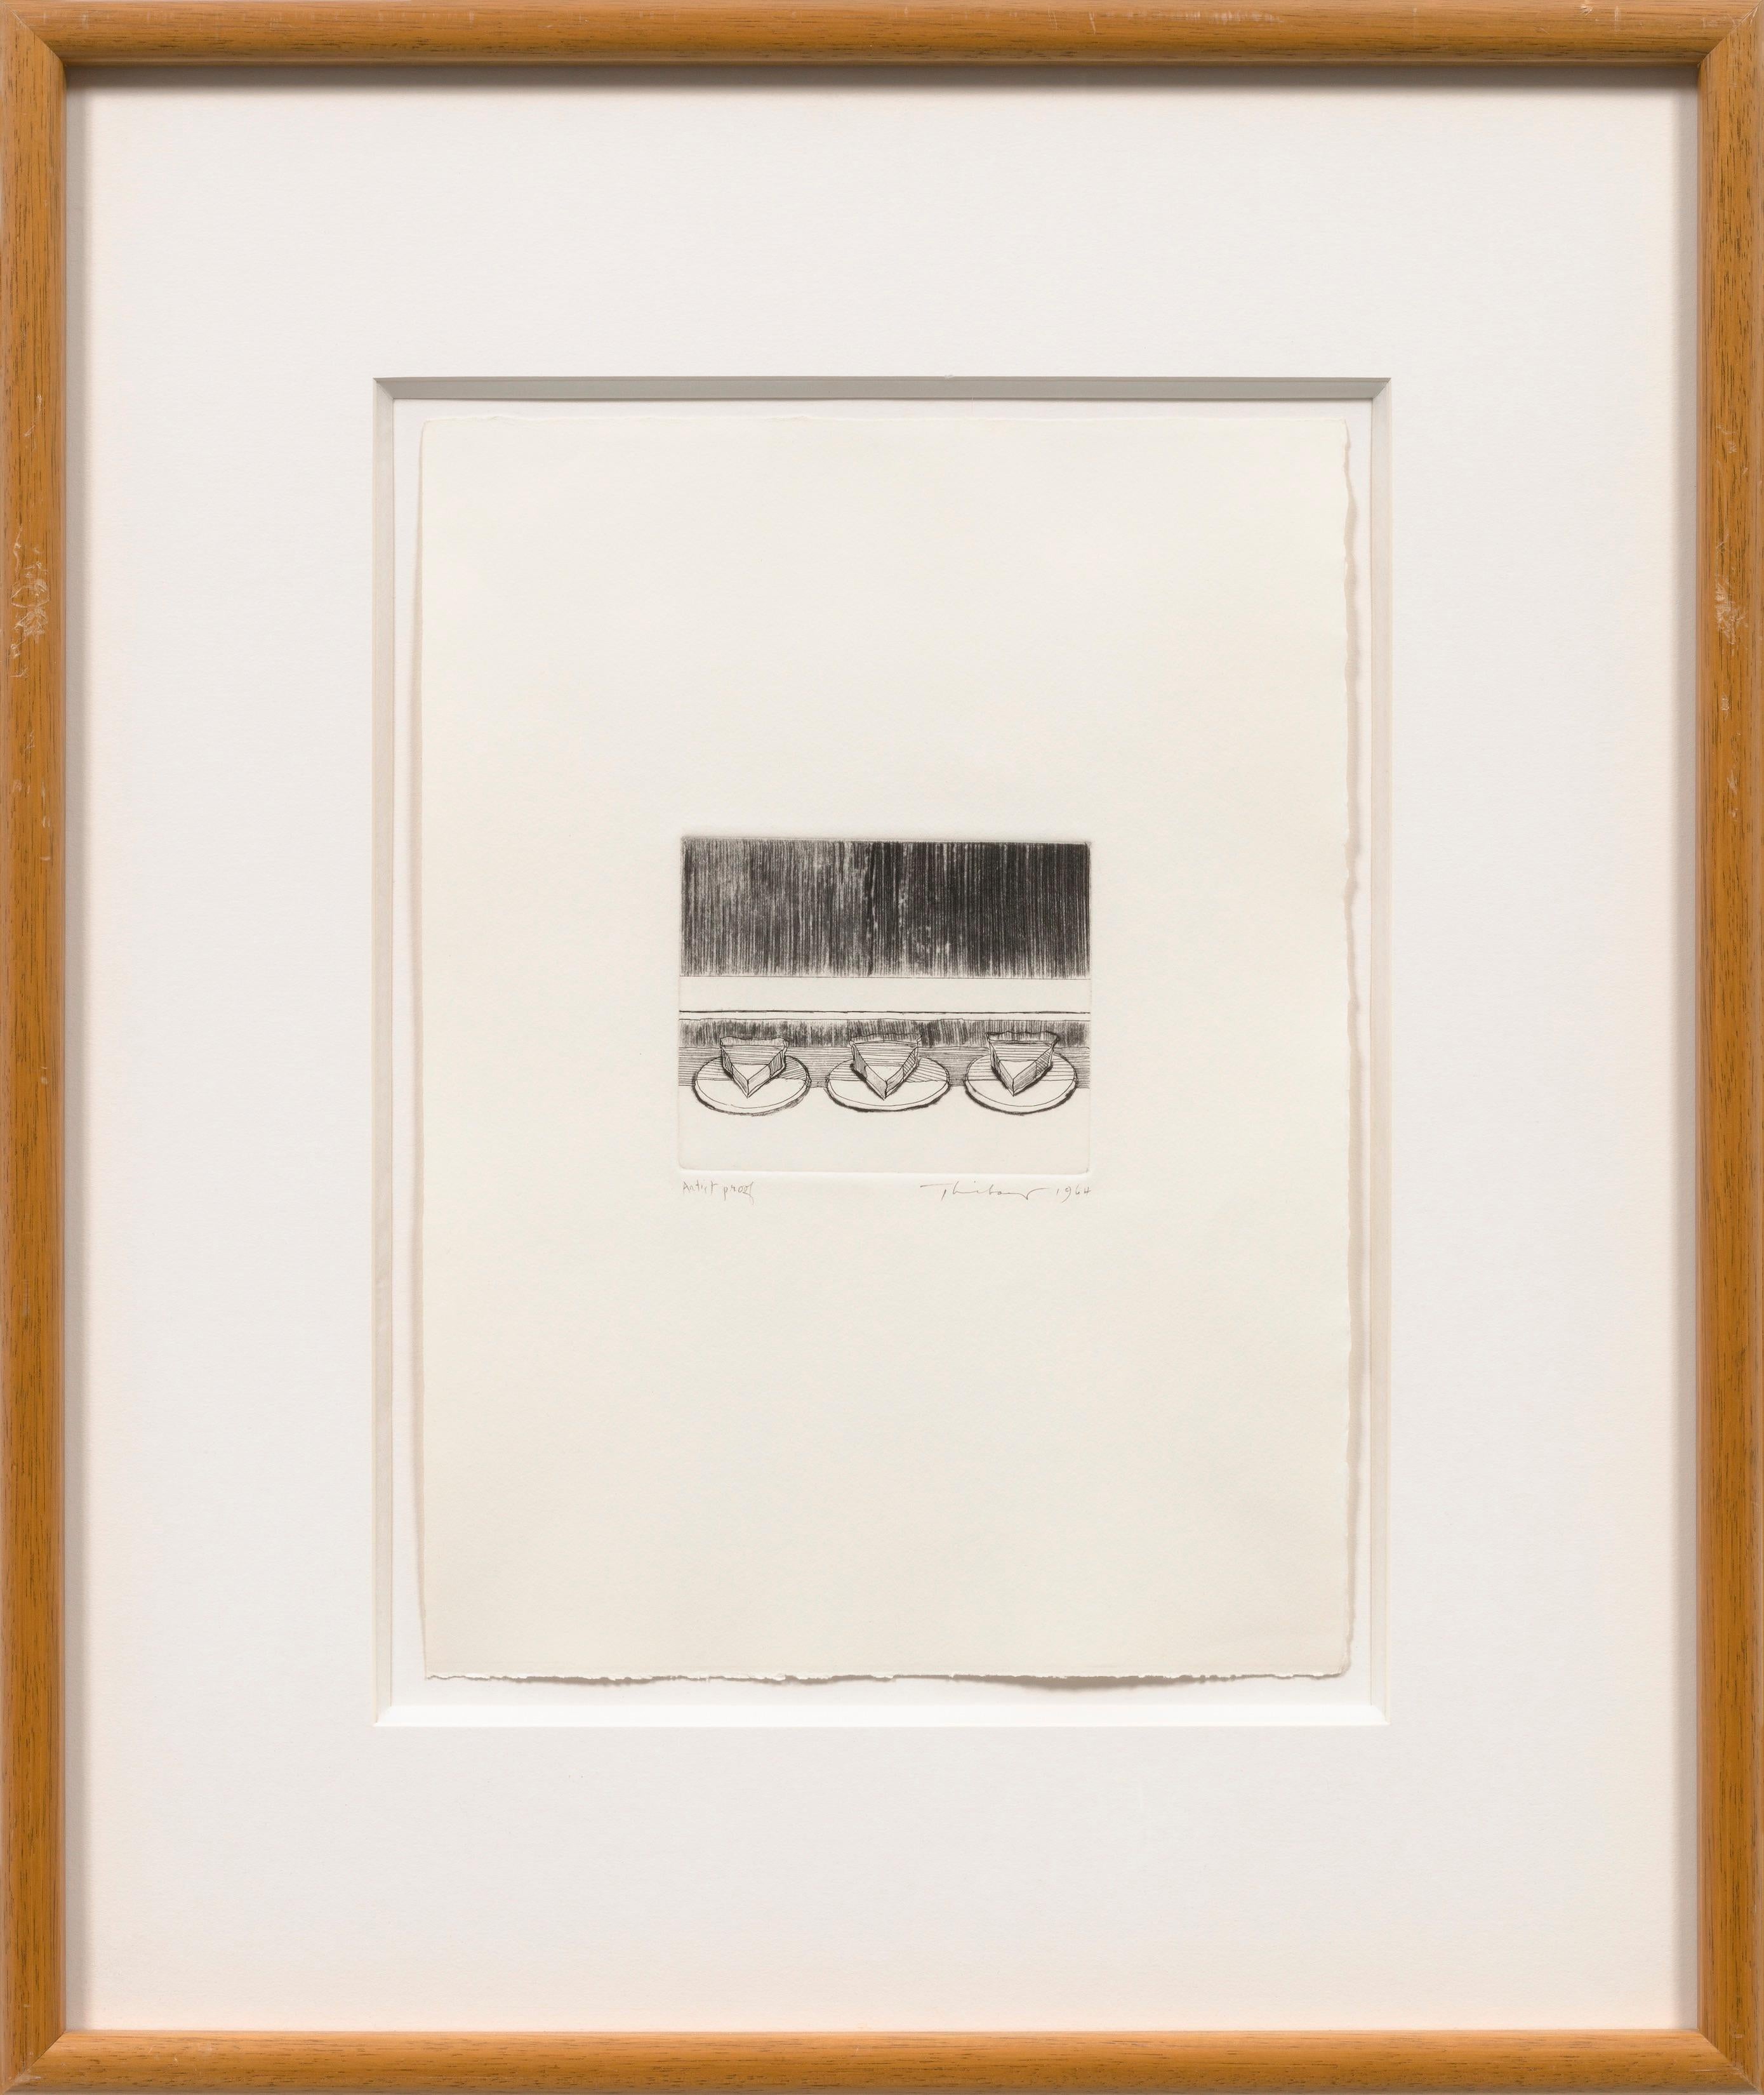 What is Wayne Thiebaud's art style?